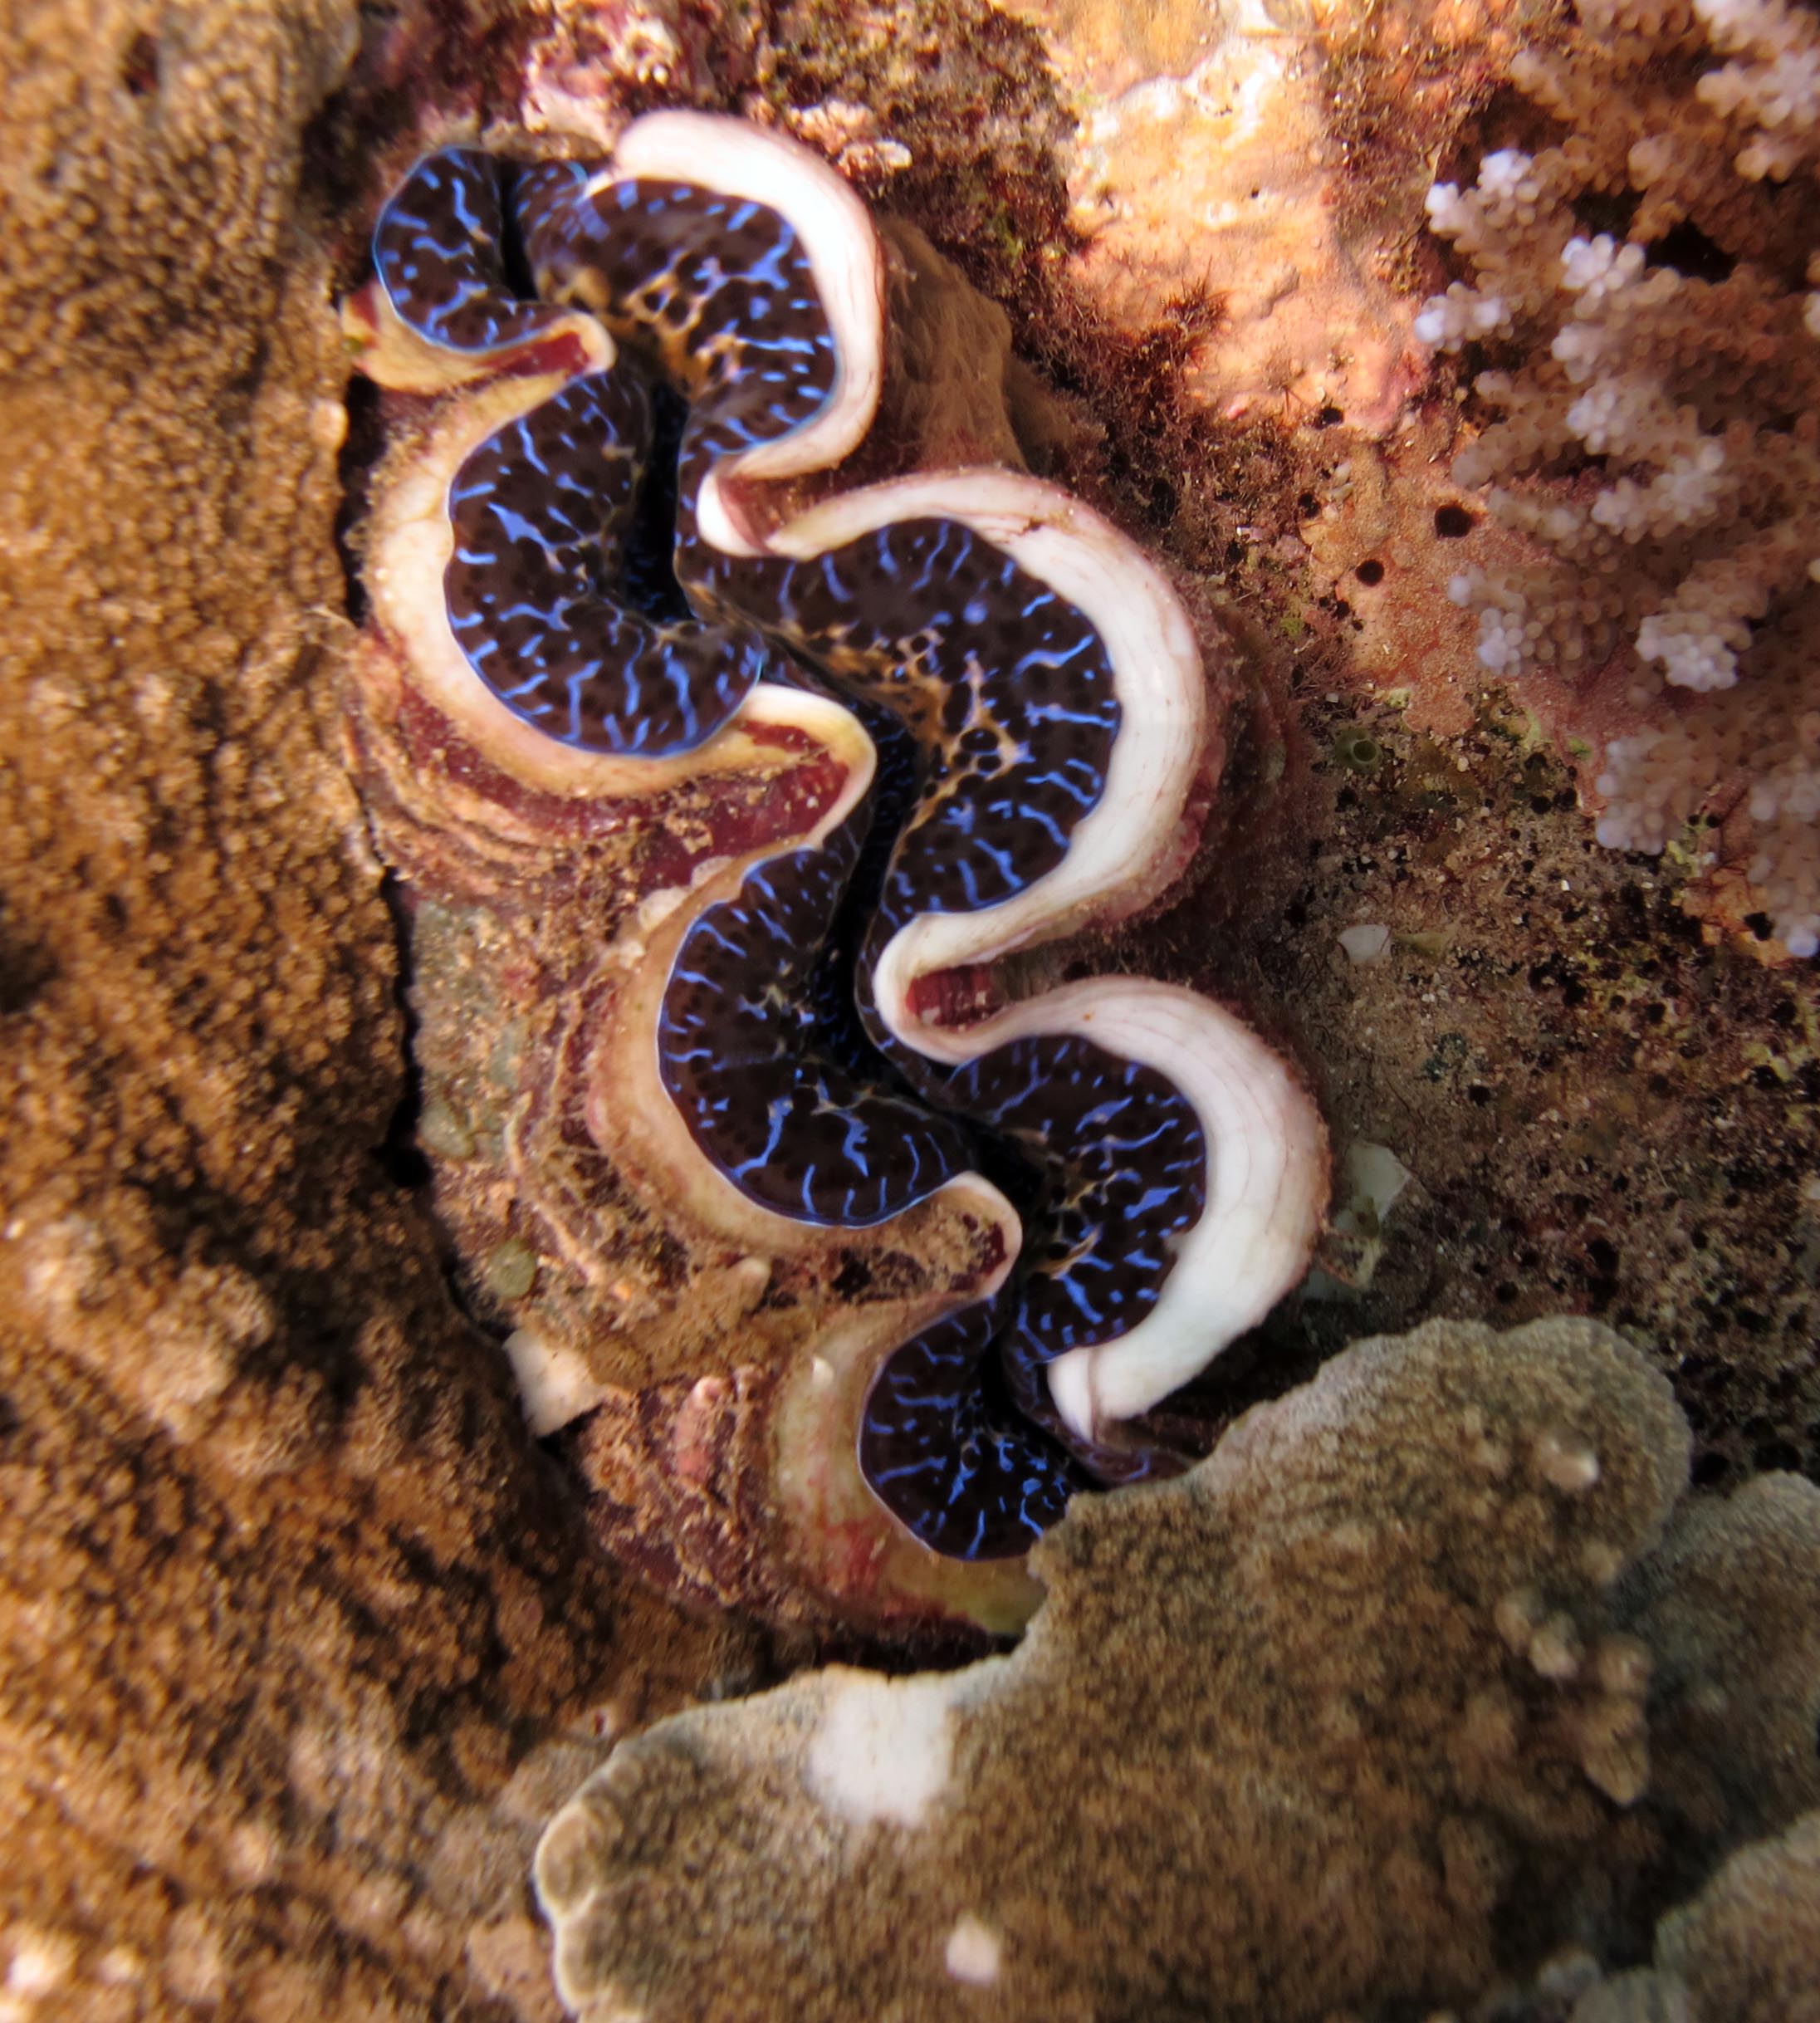 giant clam macro.jpg